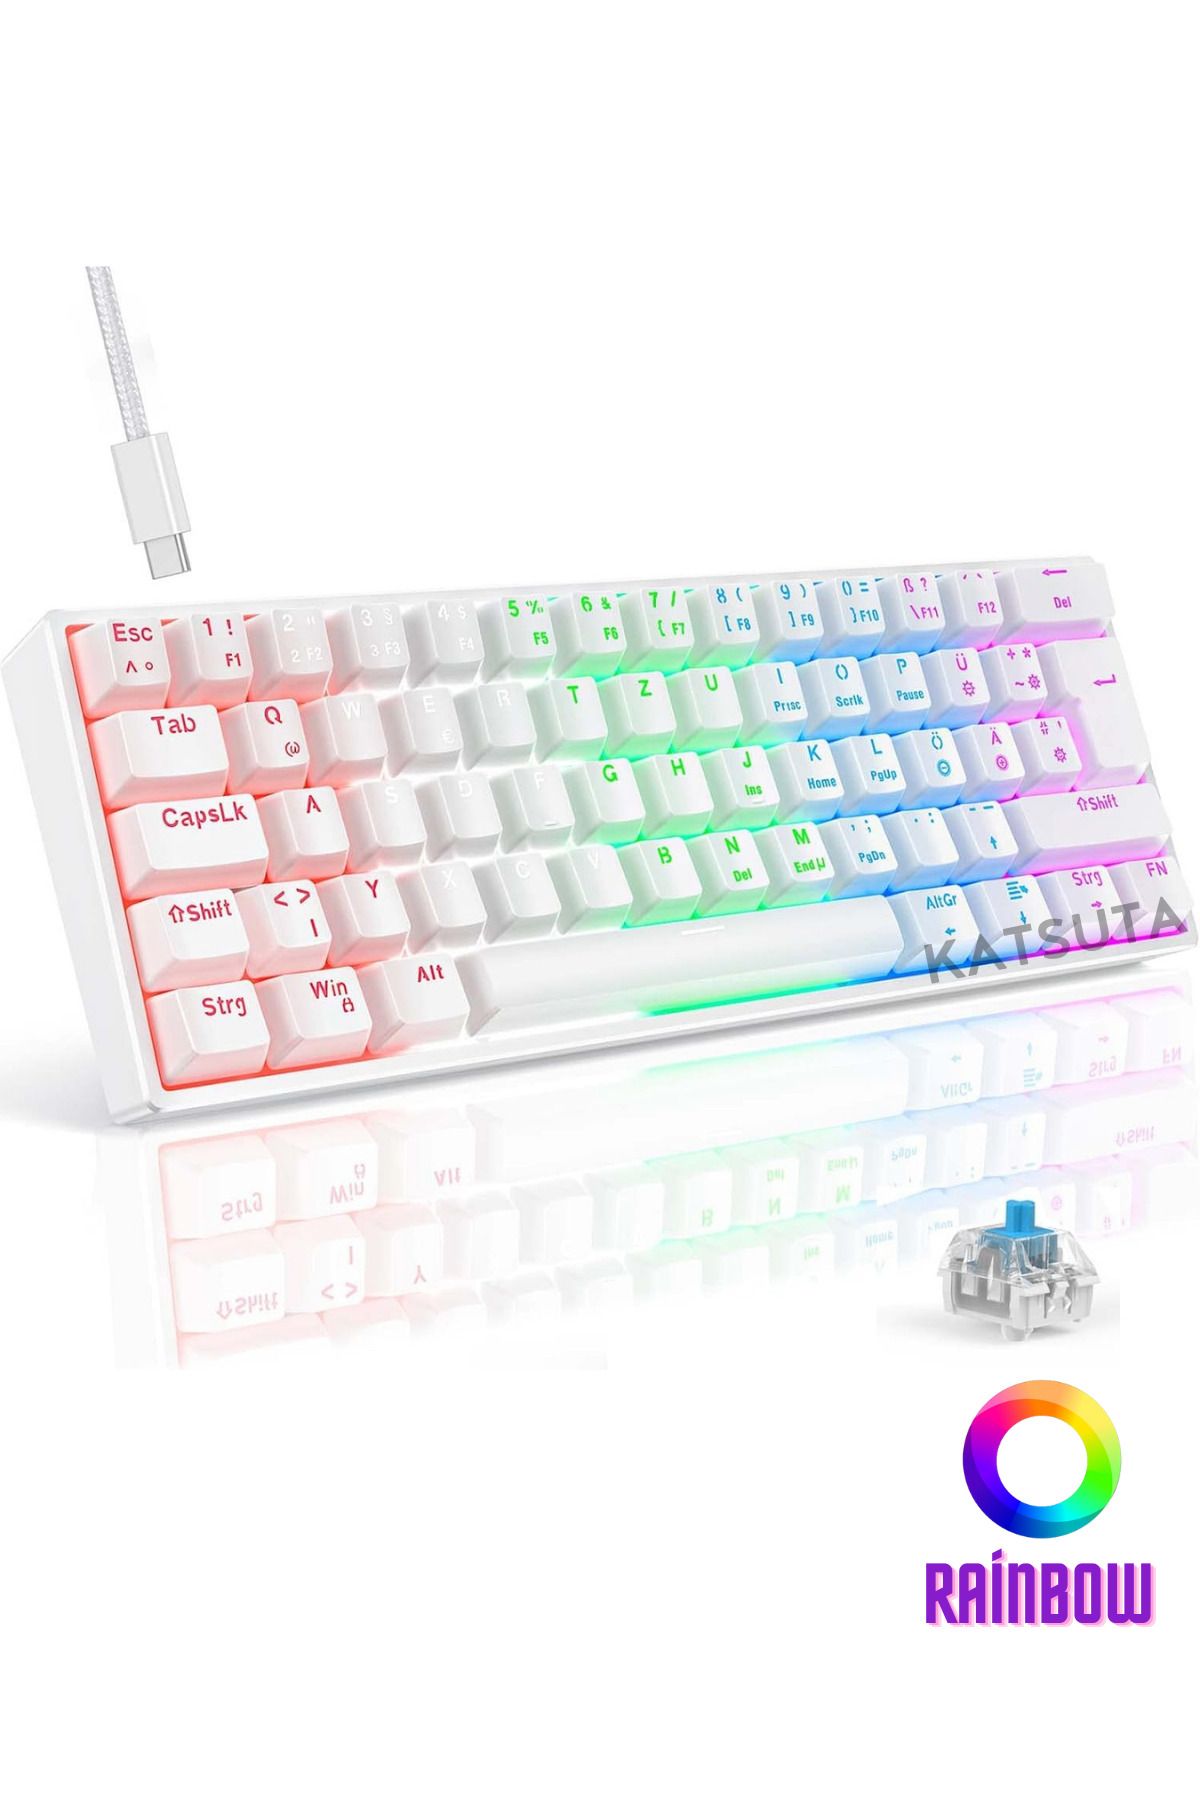 Katsuta Blue Switch Mekanik Rainbow 19 Mod Led Işıklı Mini 62 Tuşlu Gaming Oyuncu klavyesi